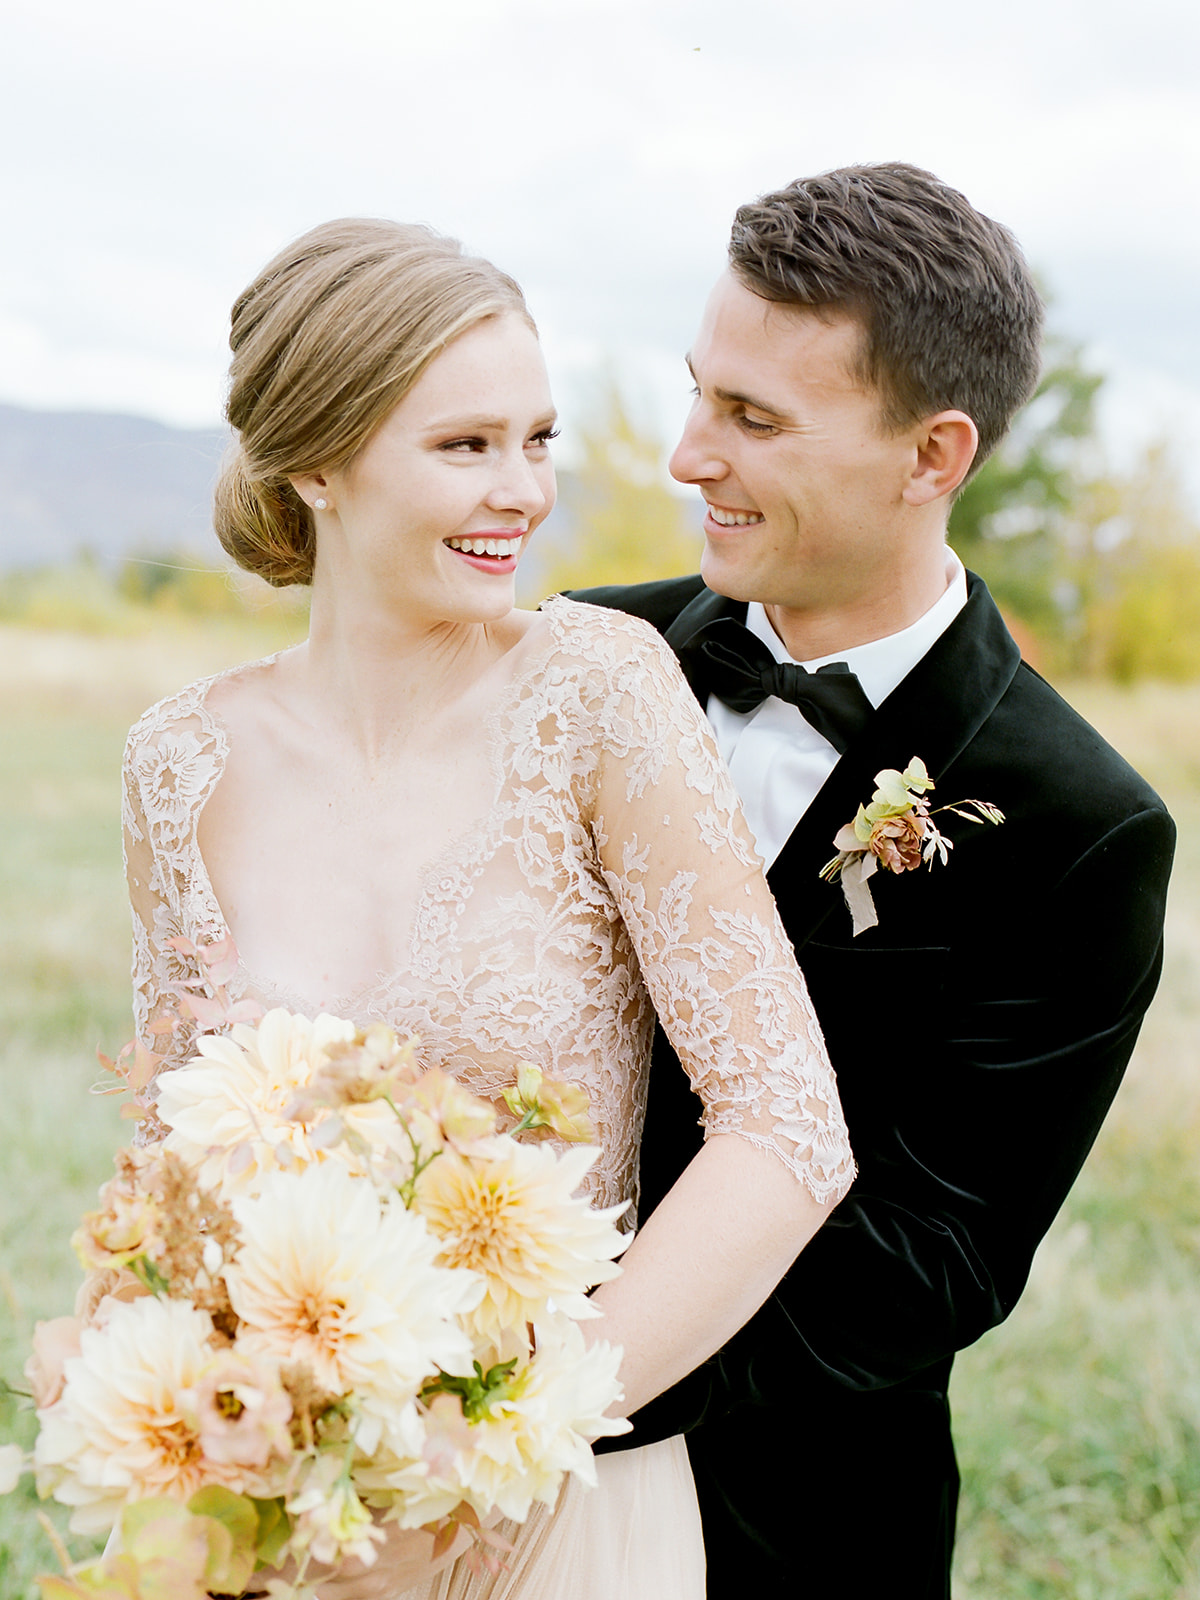 Autumn Wedding Inspiration | Rose Gold Wedding Details | Fall Wedding Floral | Rocky Mountain Bride Magazine | Michelle Leo Events | Utah Event Planner and Designer | Heather Nan Photography